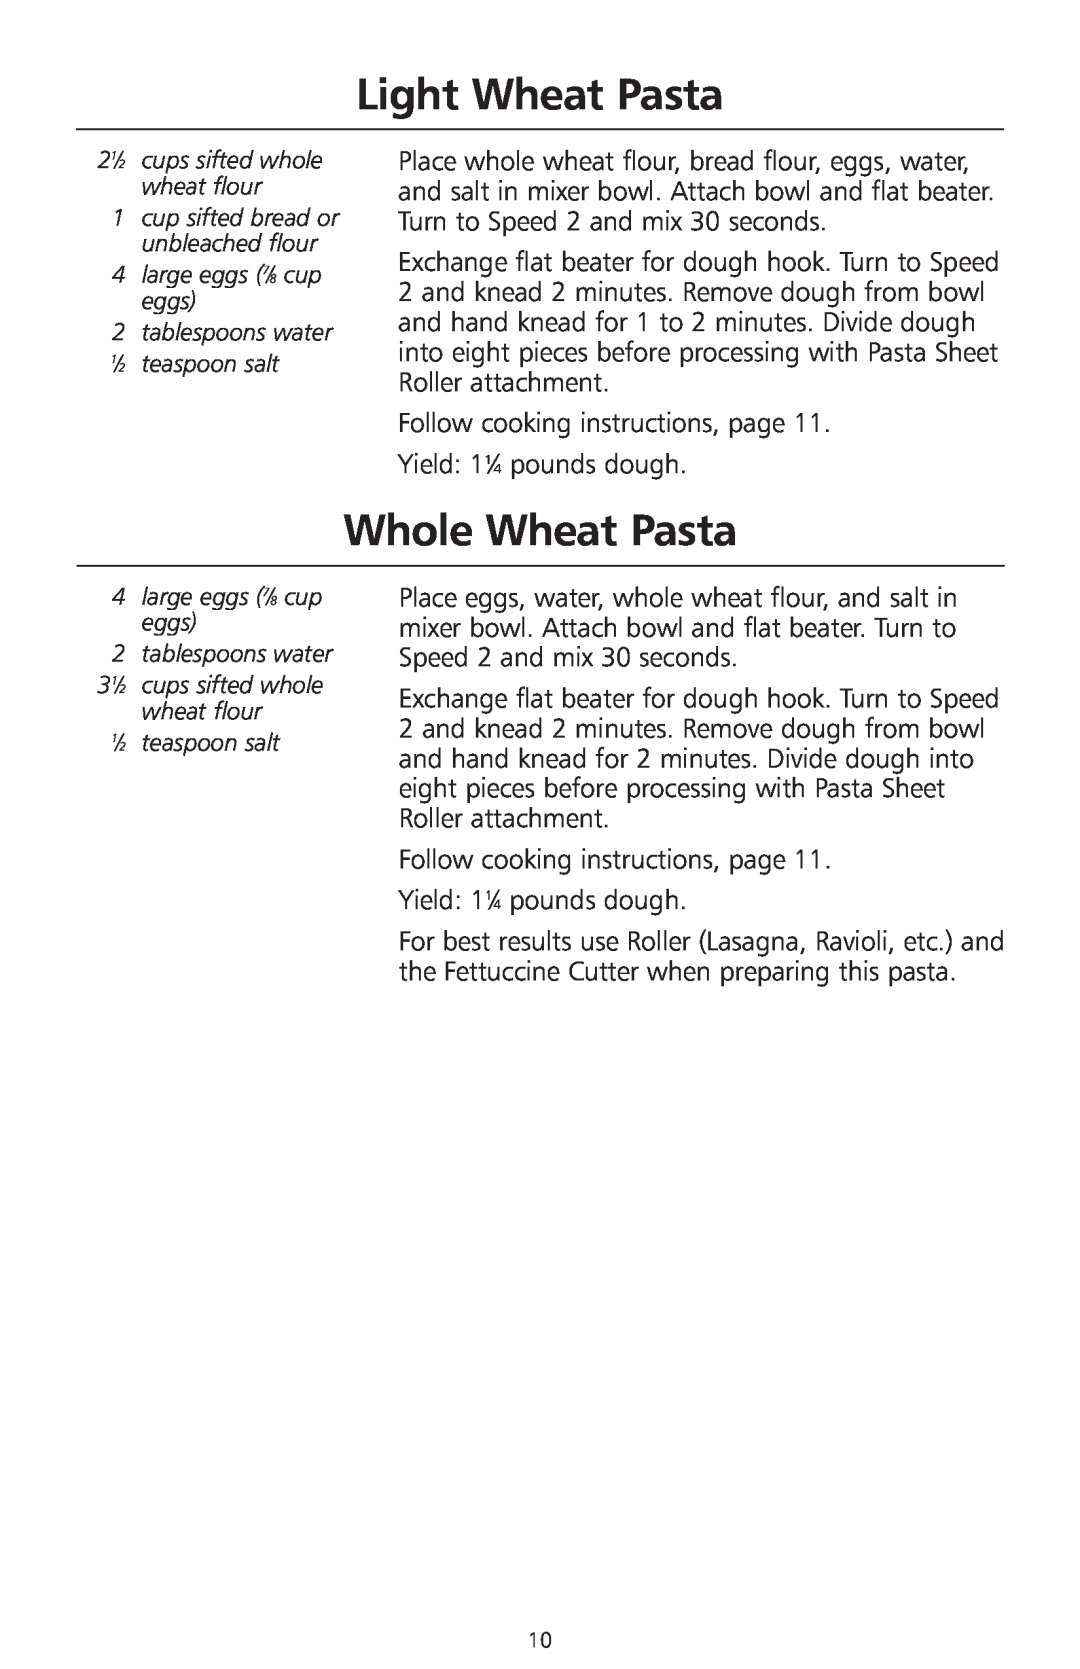 KitchenAid KPRA manual Light Wheat Pasta, Whole Wheat Pasta 